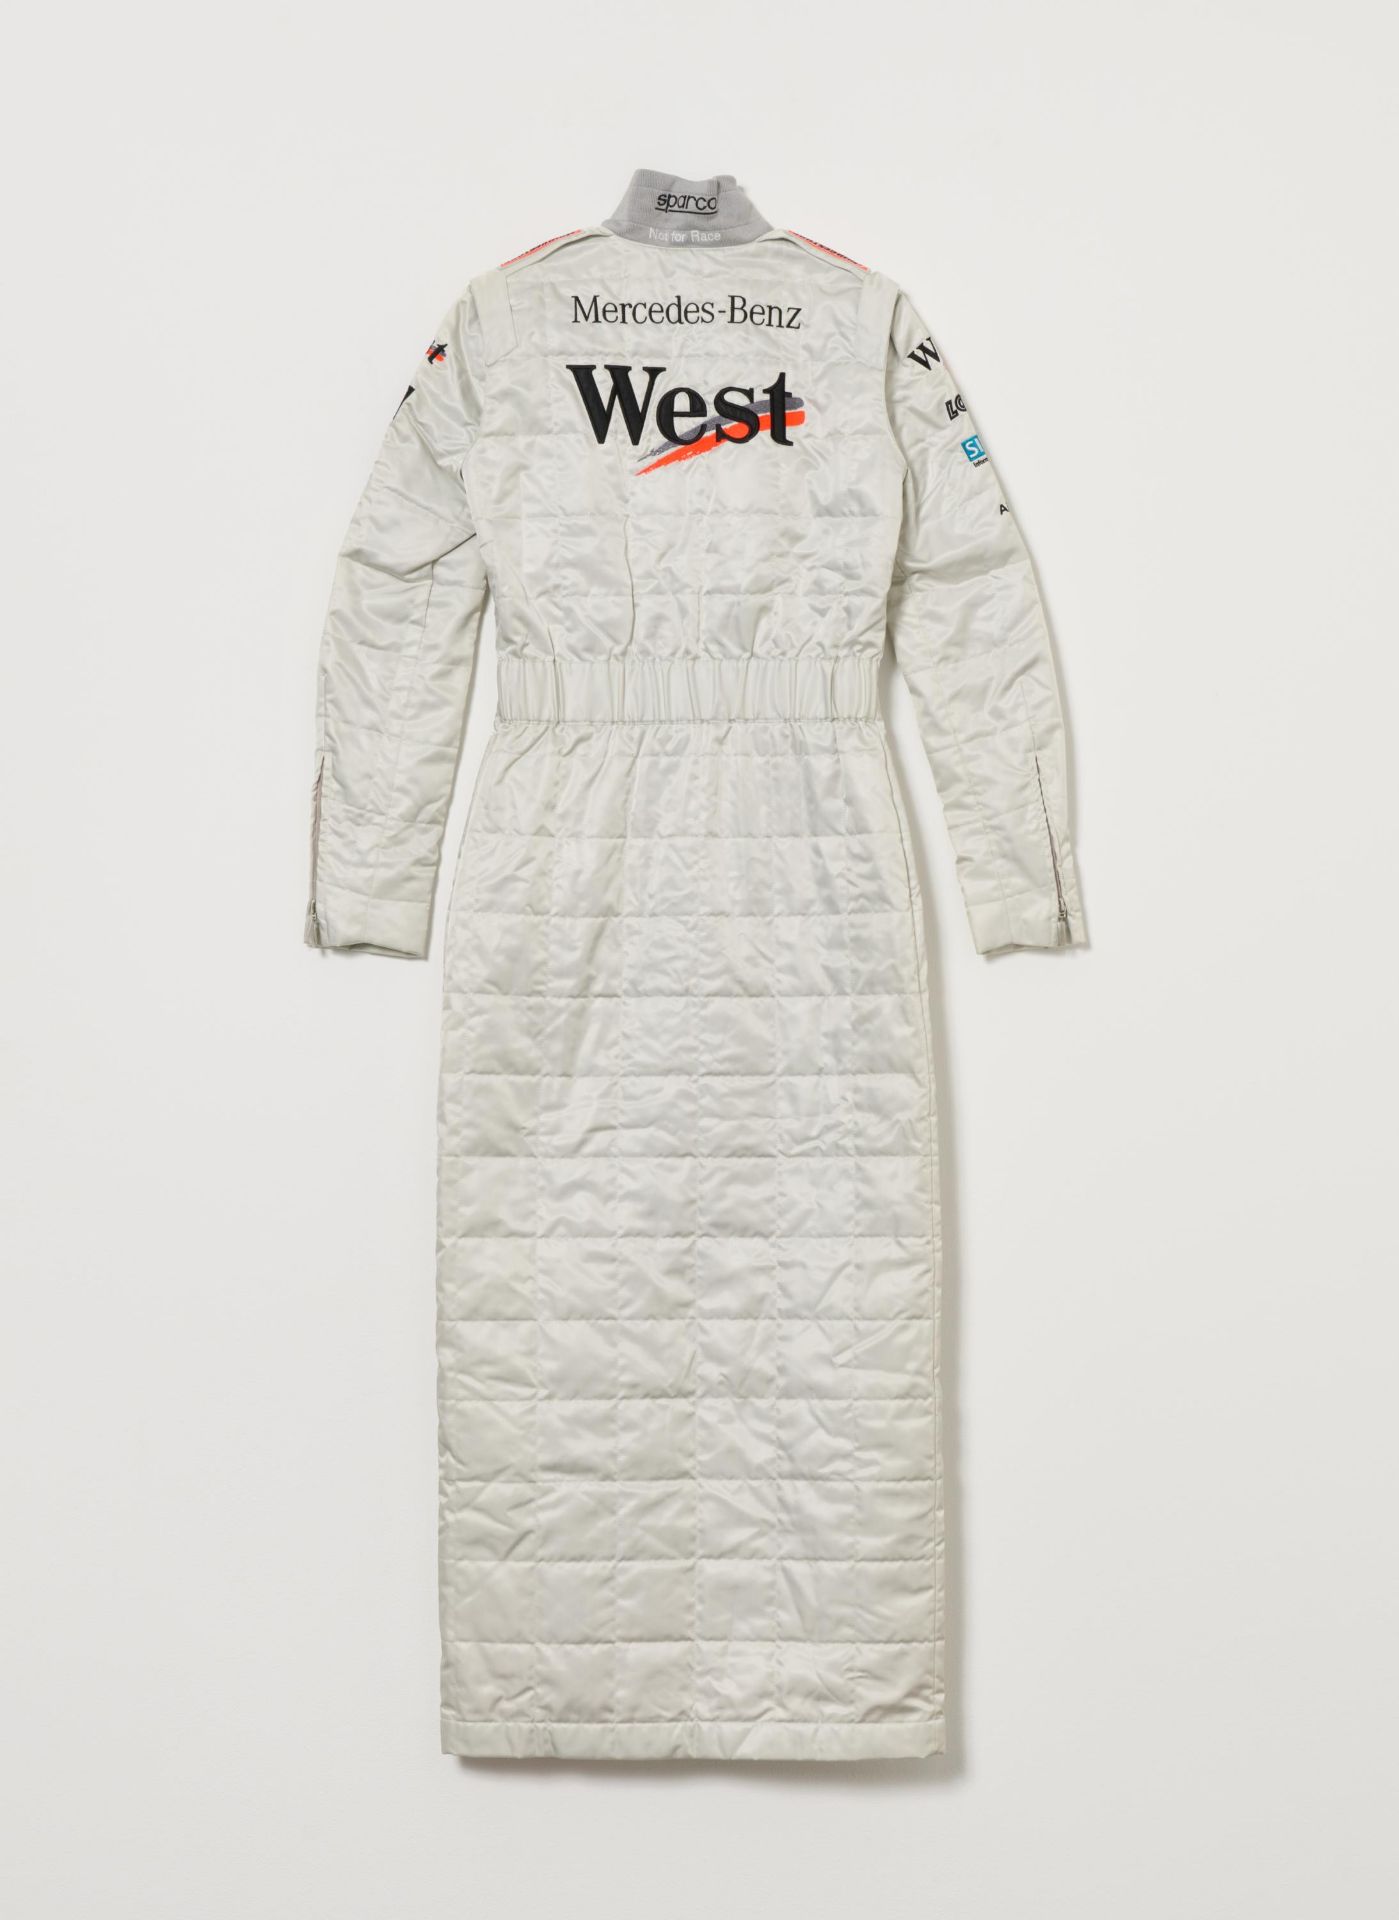 Sylvie Fleury: Formula One Dress for Hugo Boss - Image 2 of 2